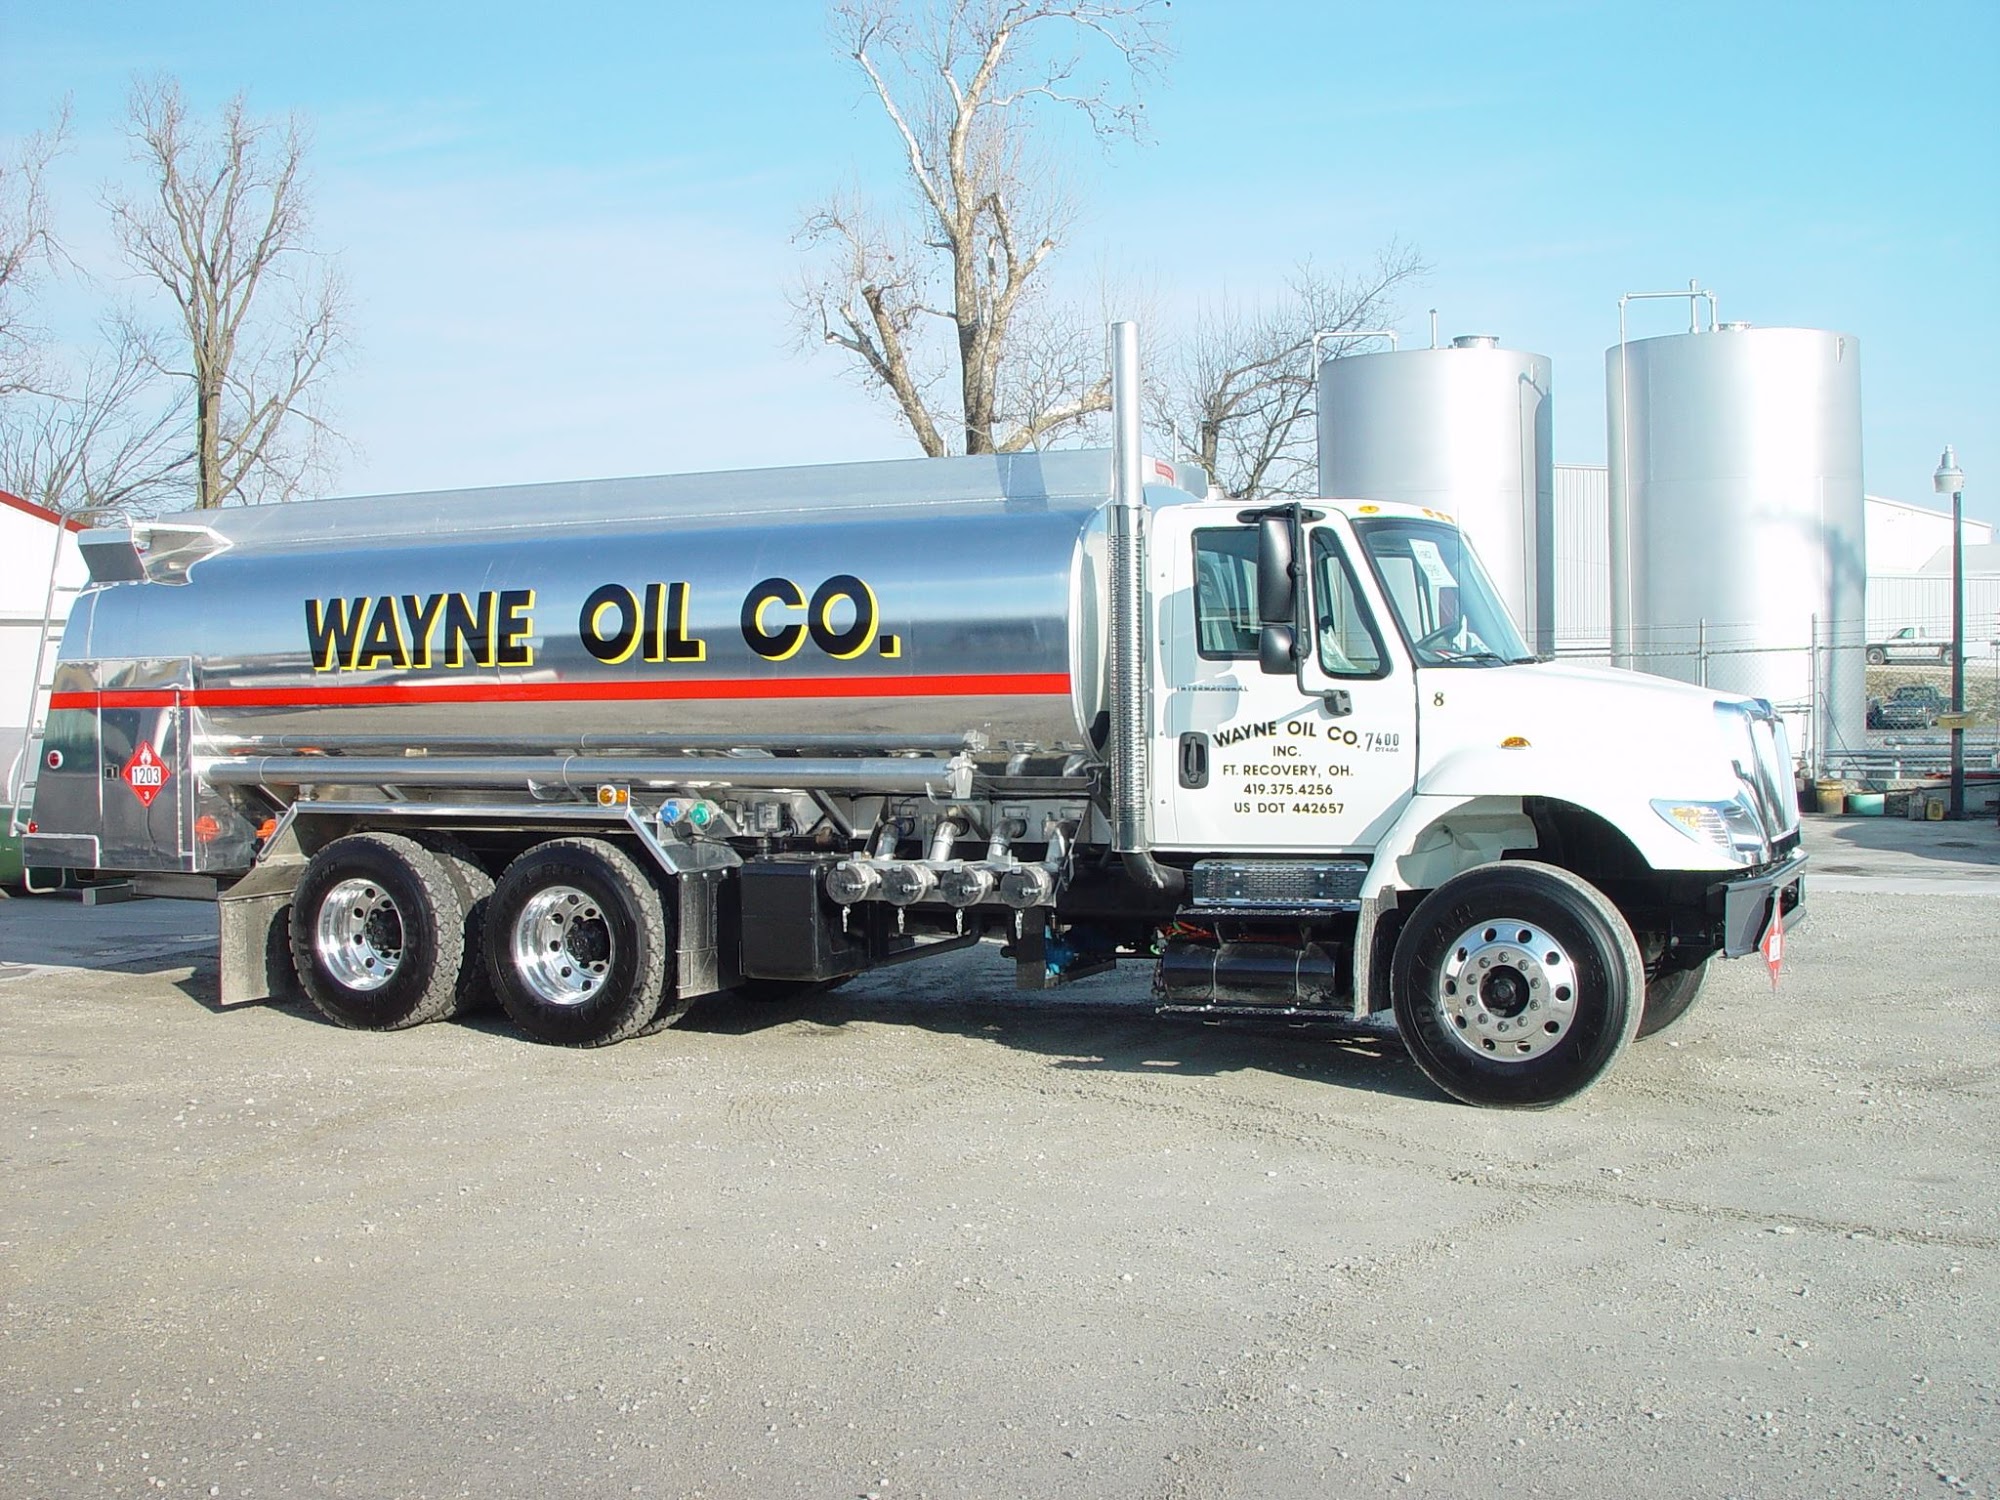 Wayne Oil Company